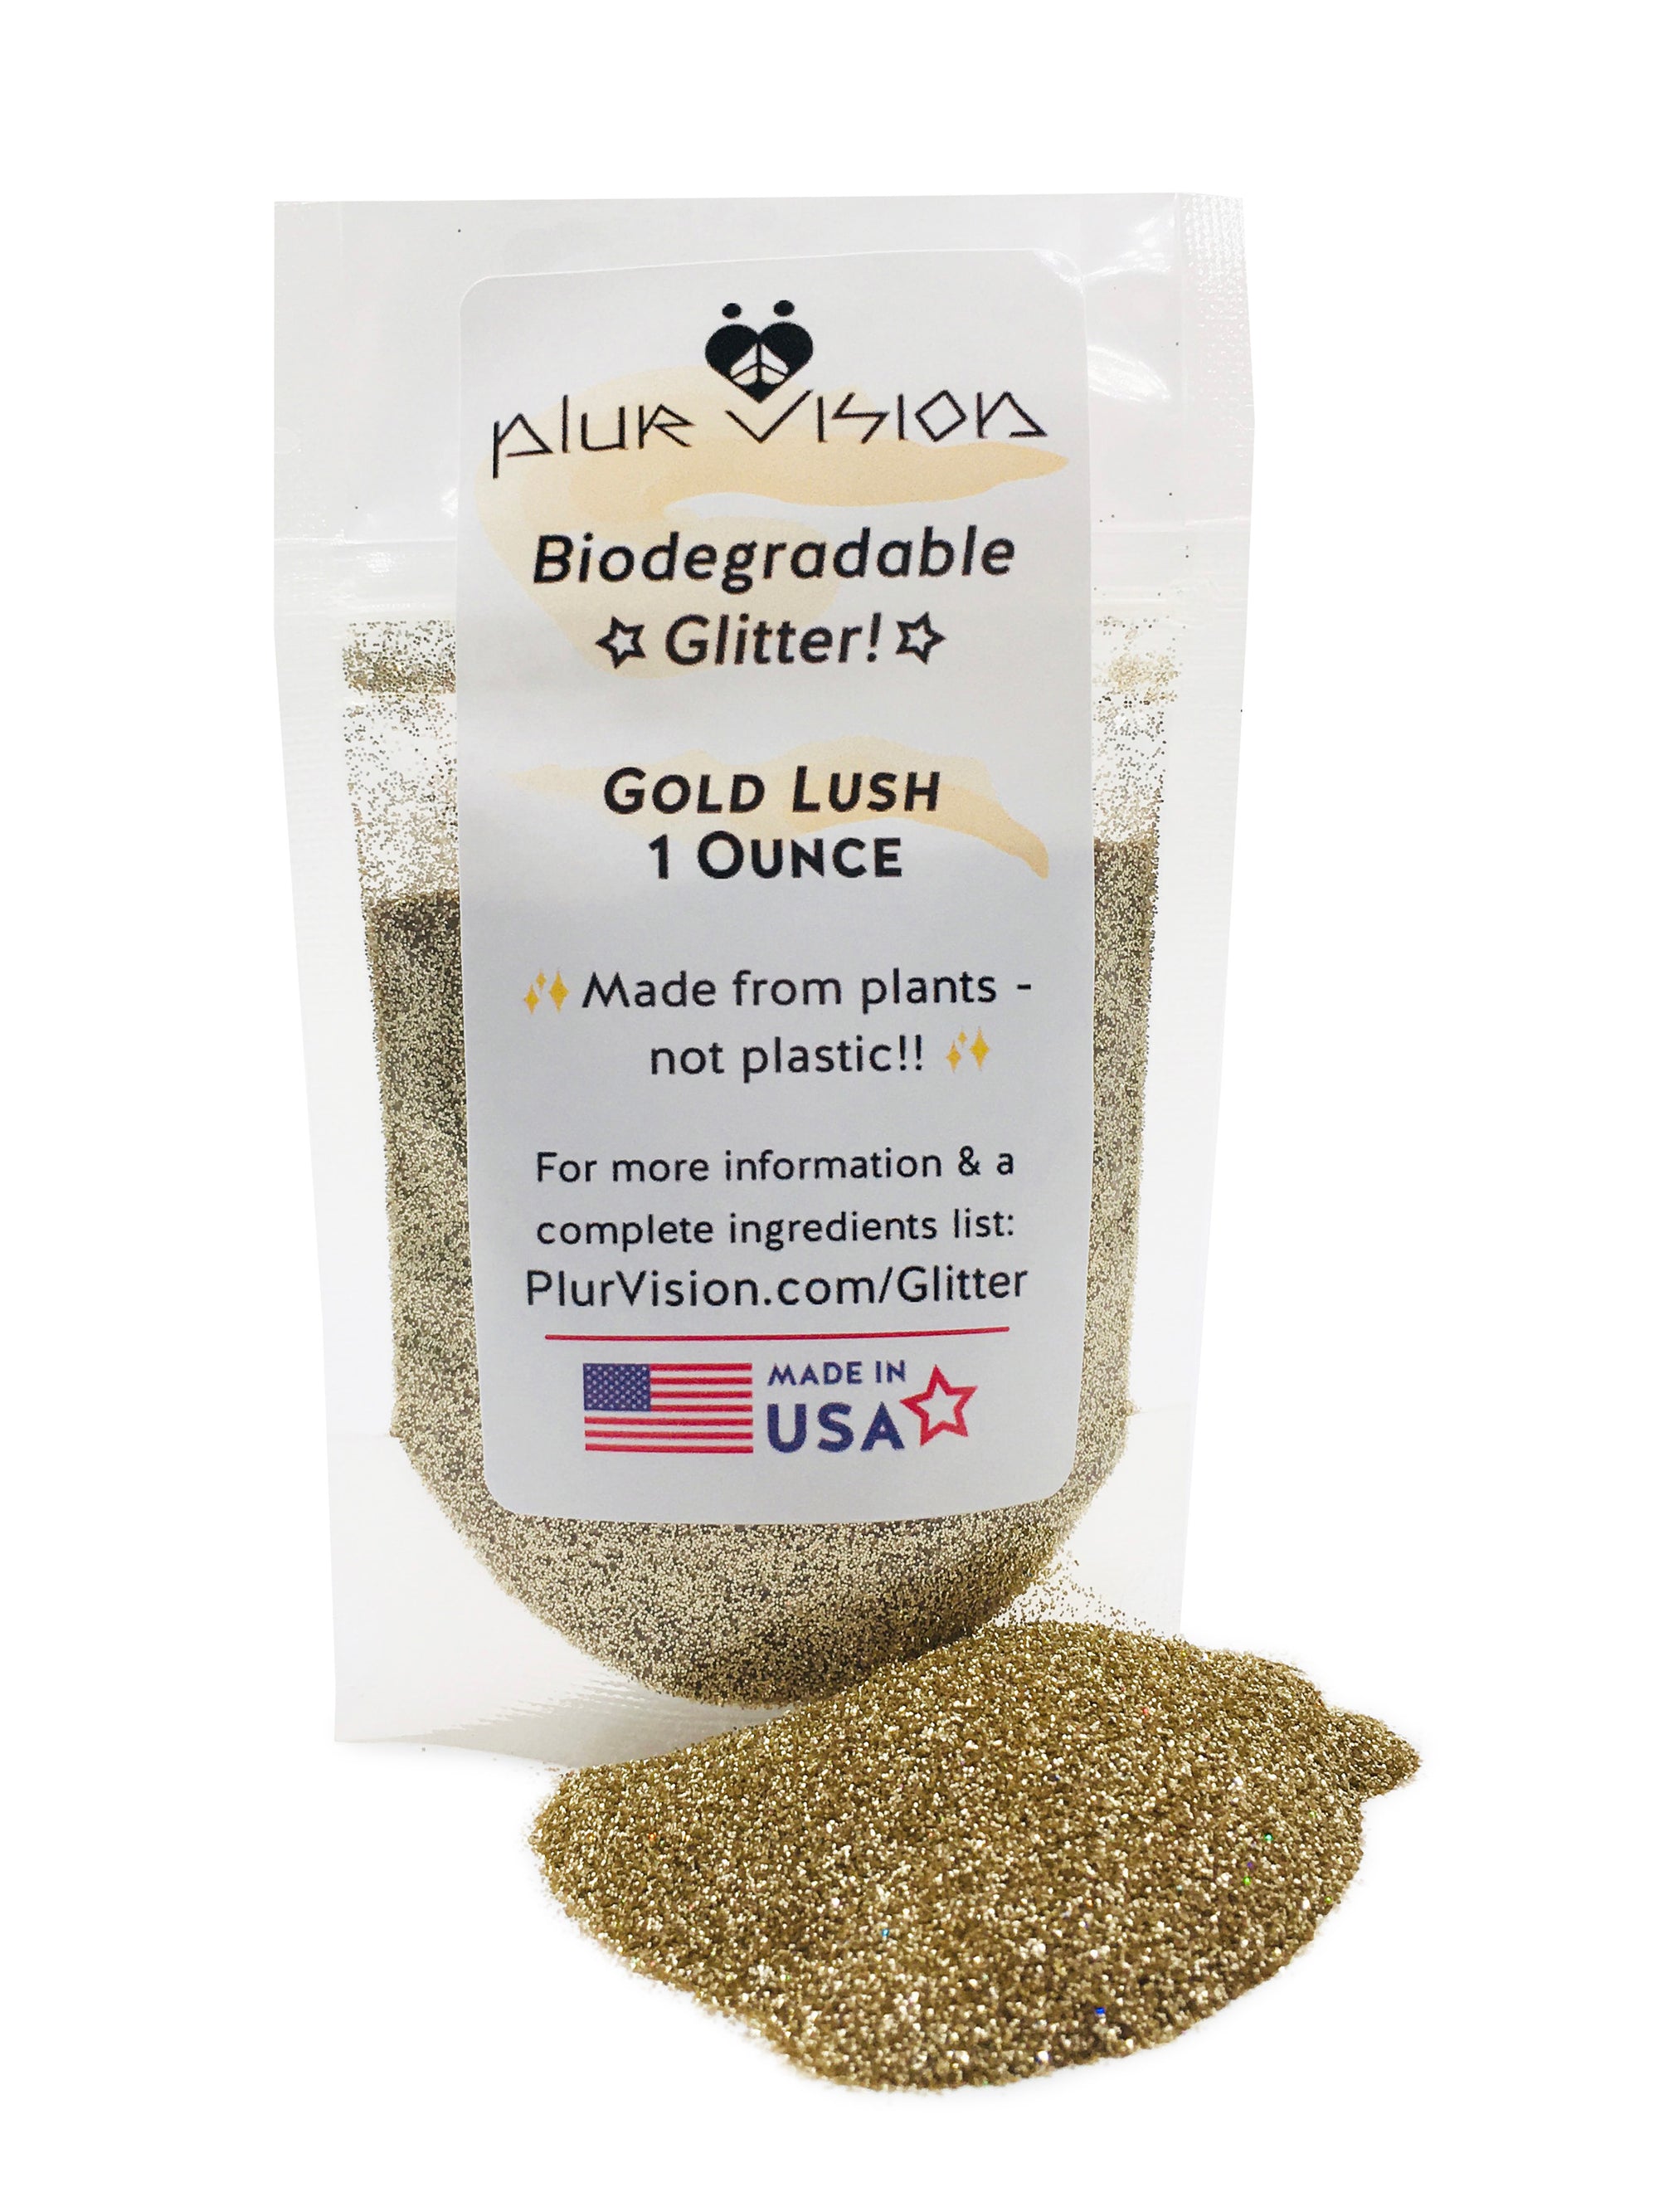 ✨ Gold Lush Biodegradable Glitter! ✨